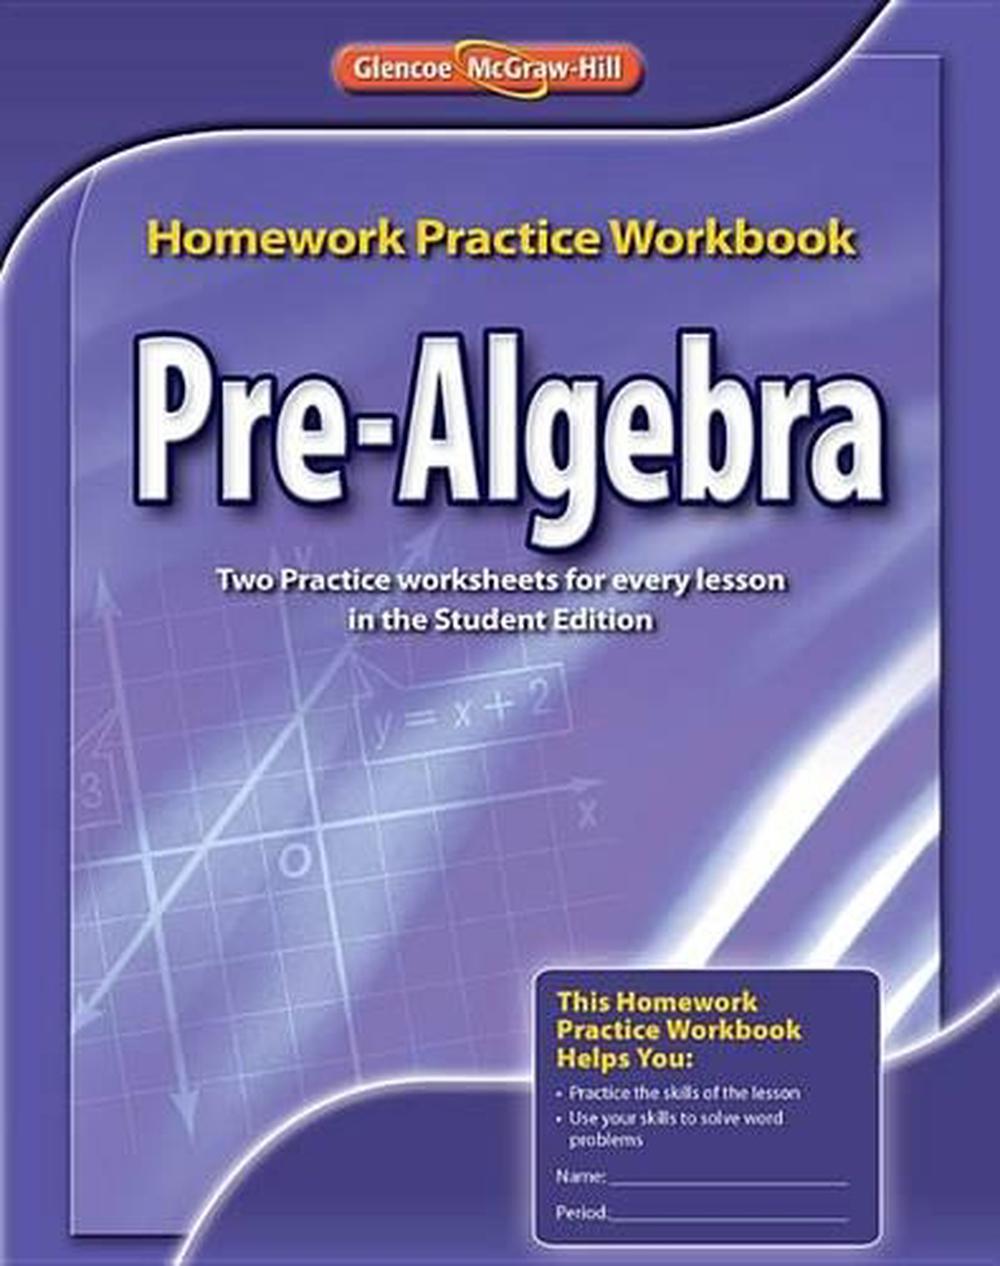 homework practice workbook pre algebra answers